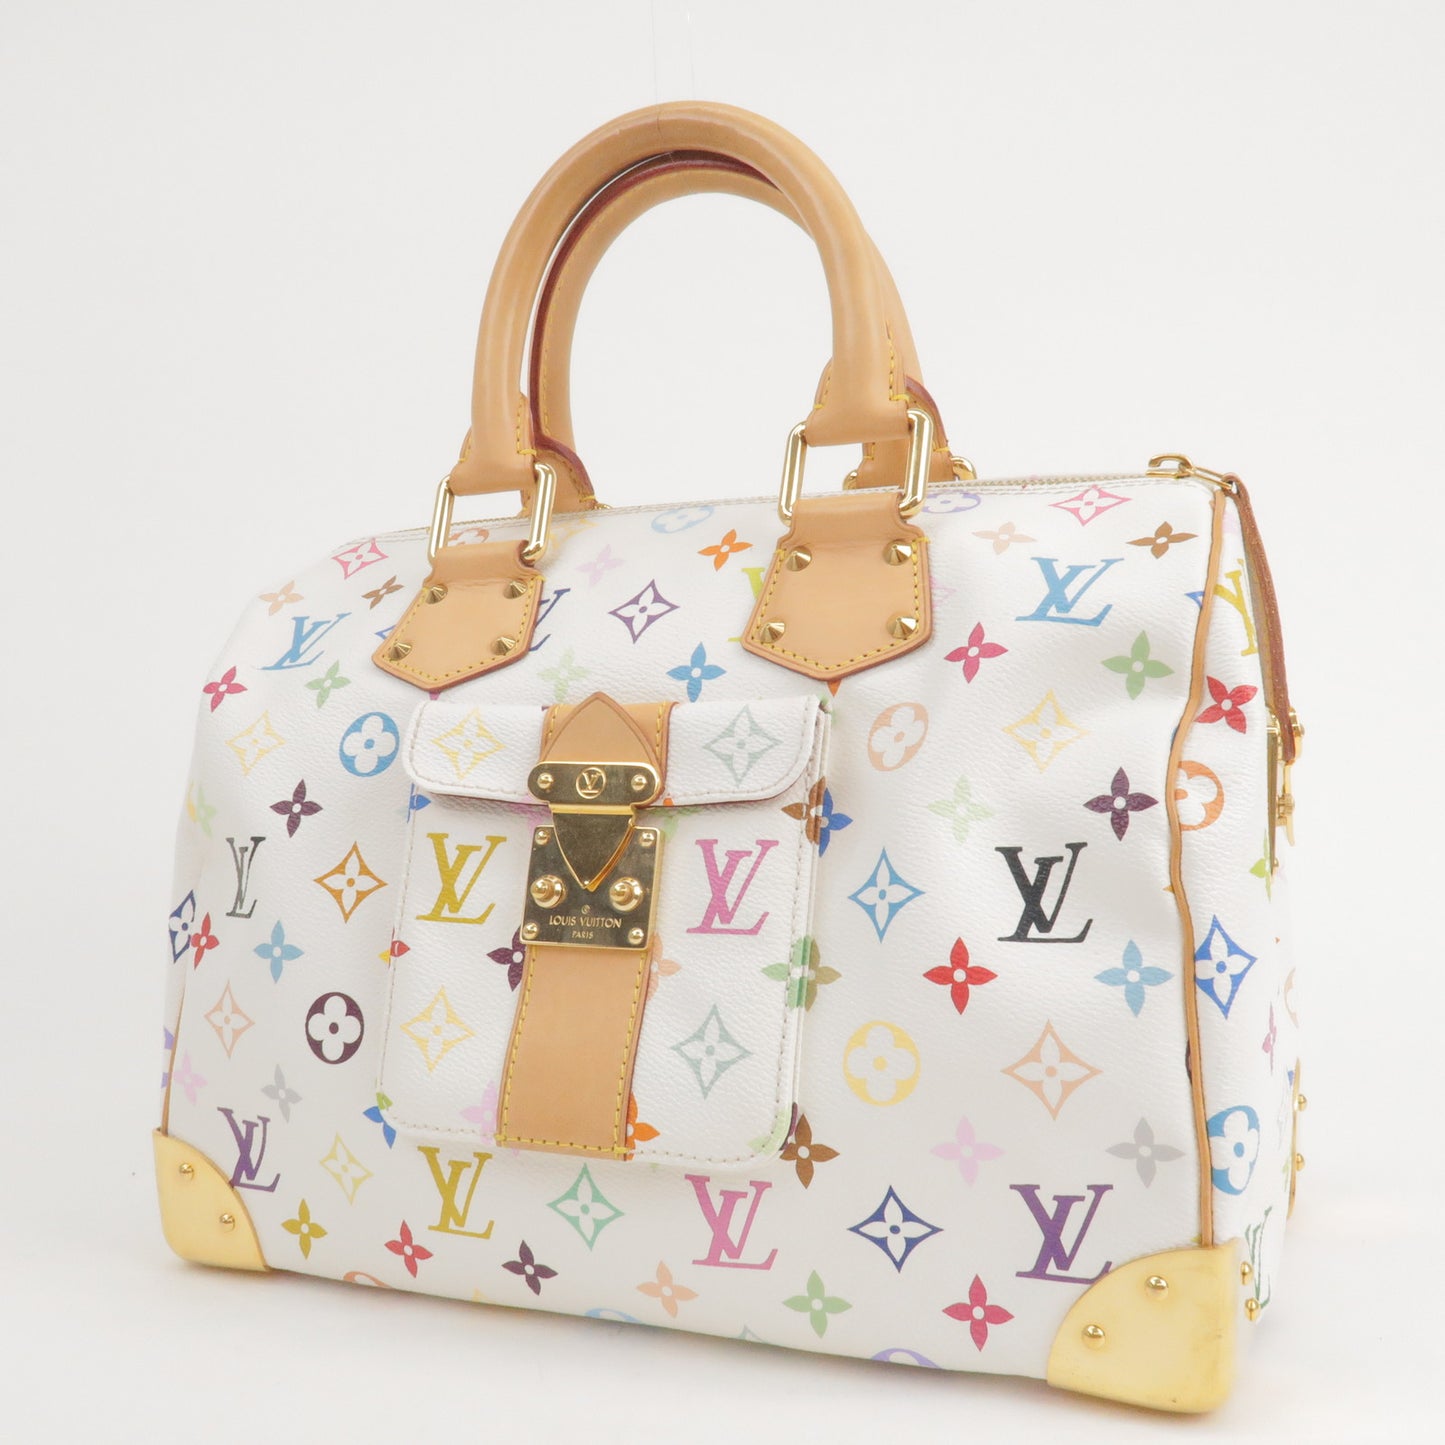 Louis Vuitton Bag Multicolor Speedy 30 Bron white monogram from japan